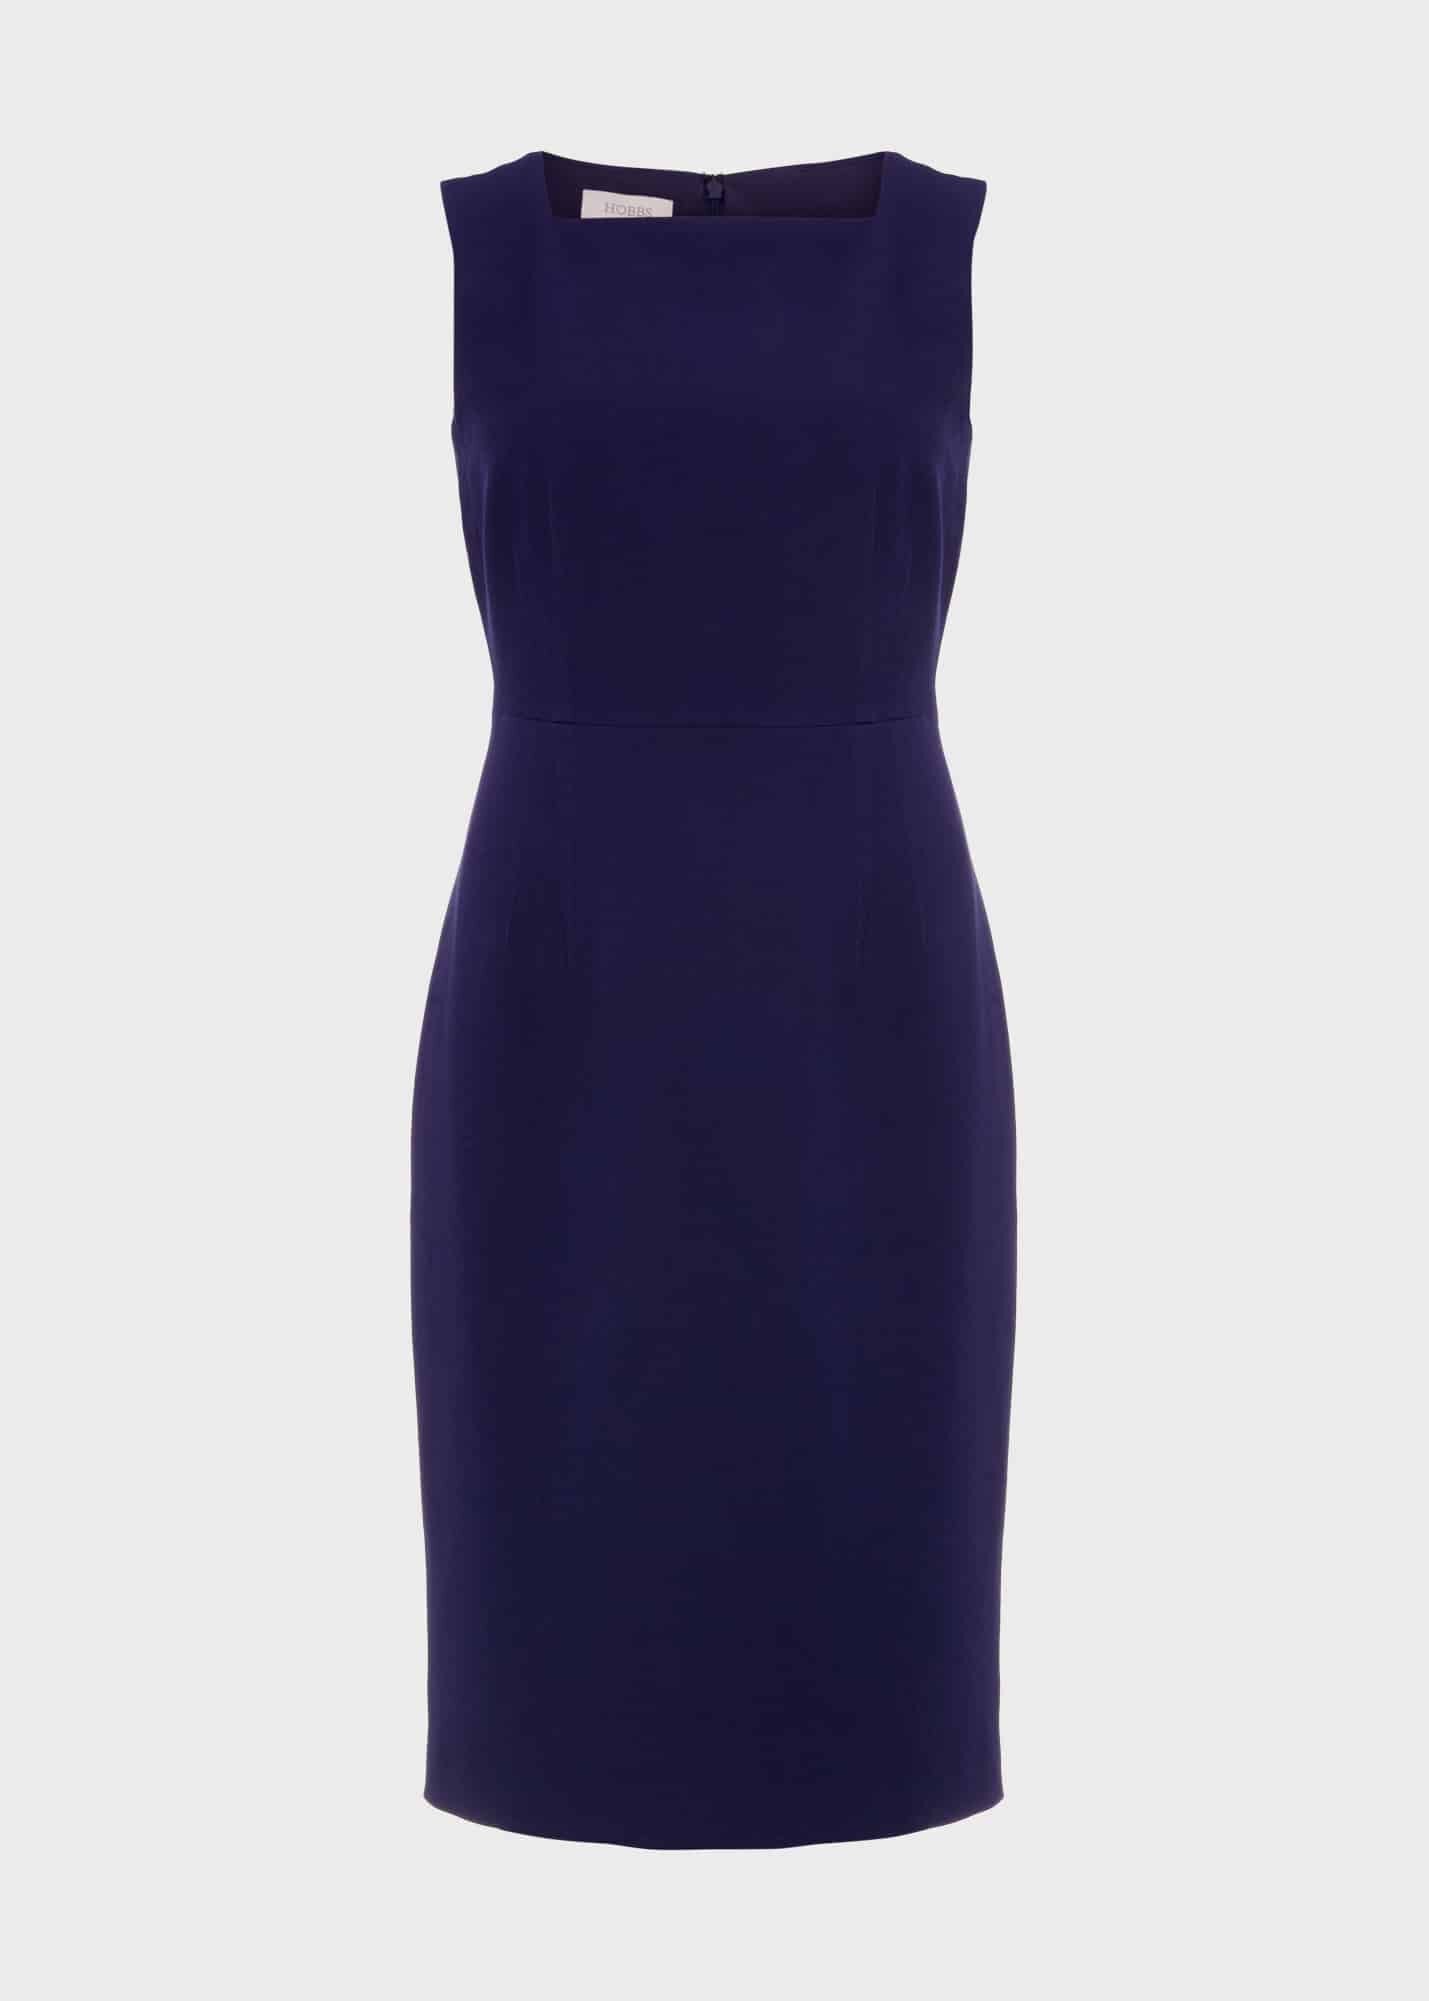 Romy Dress 0223/5882/9845l00 Rich-Navy-Blue